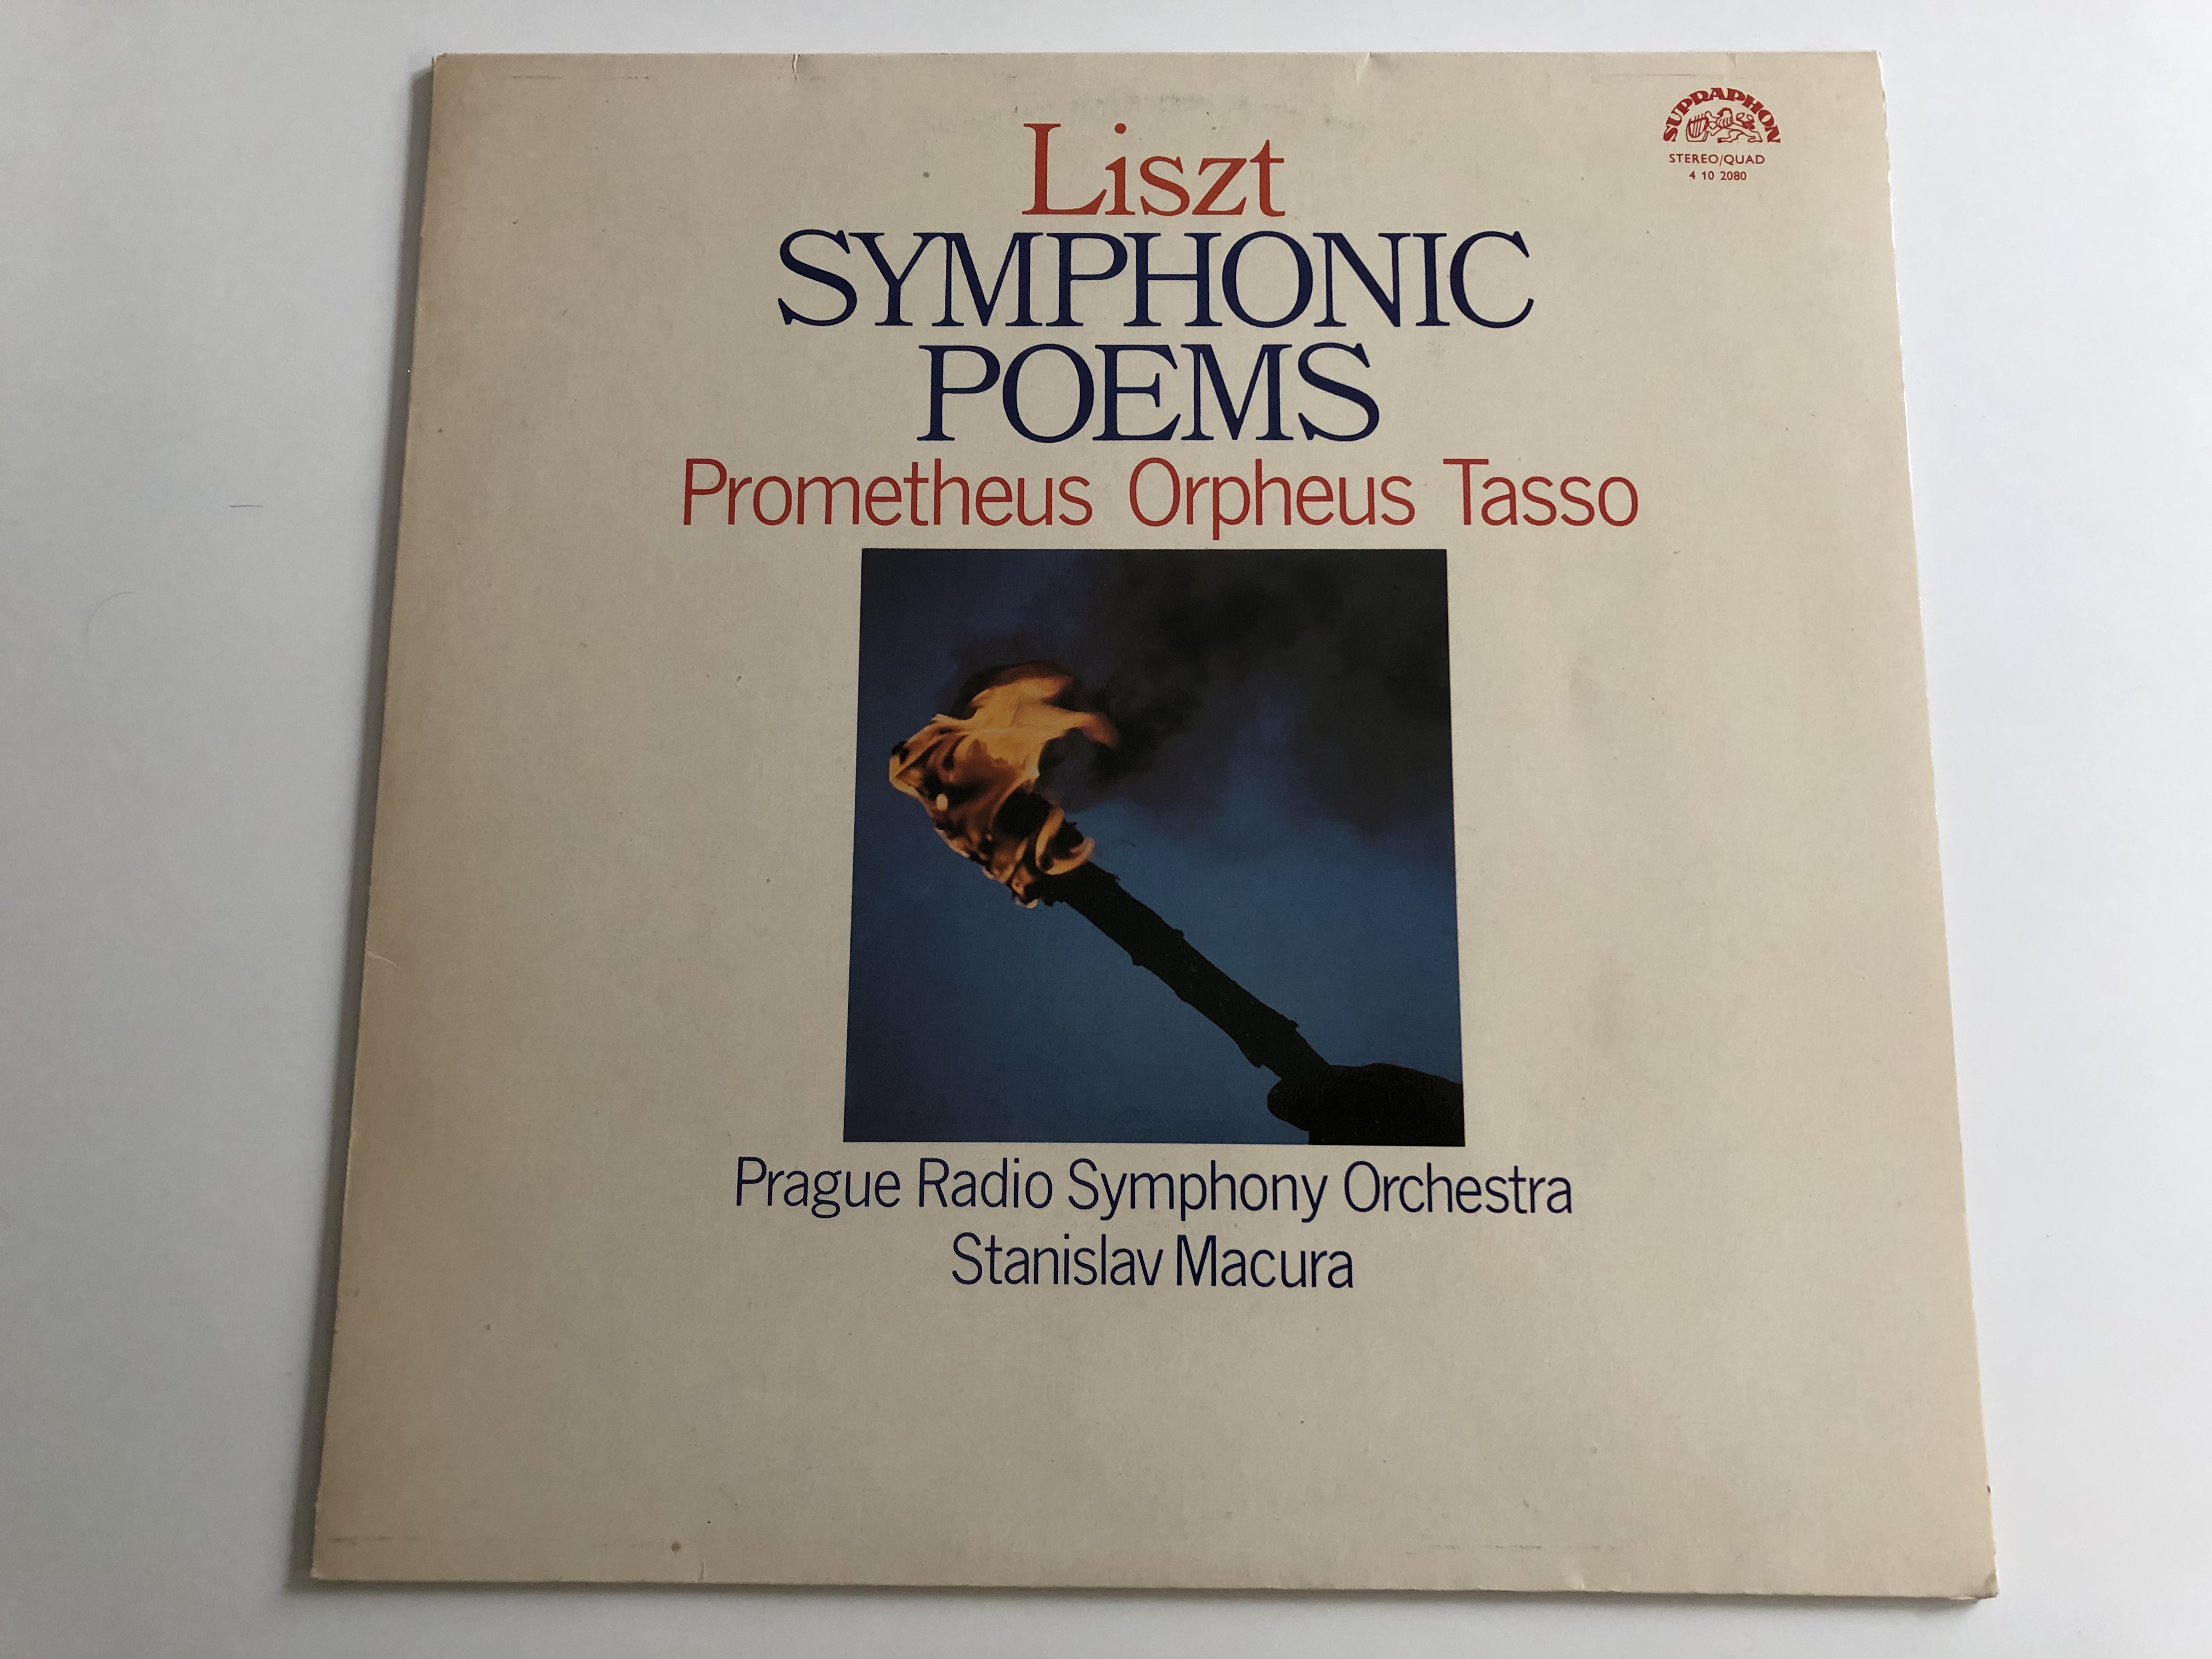 liszt-symphonic-poems-prometheus-orpheus-tasso-prague-radio-symphony-orchestra-stanislav-macura-supraphon-lp-stereoquad-4-10-2080-1-.jpg